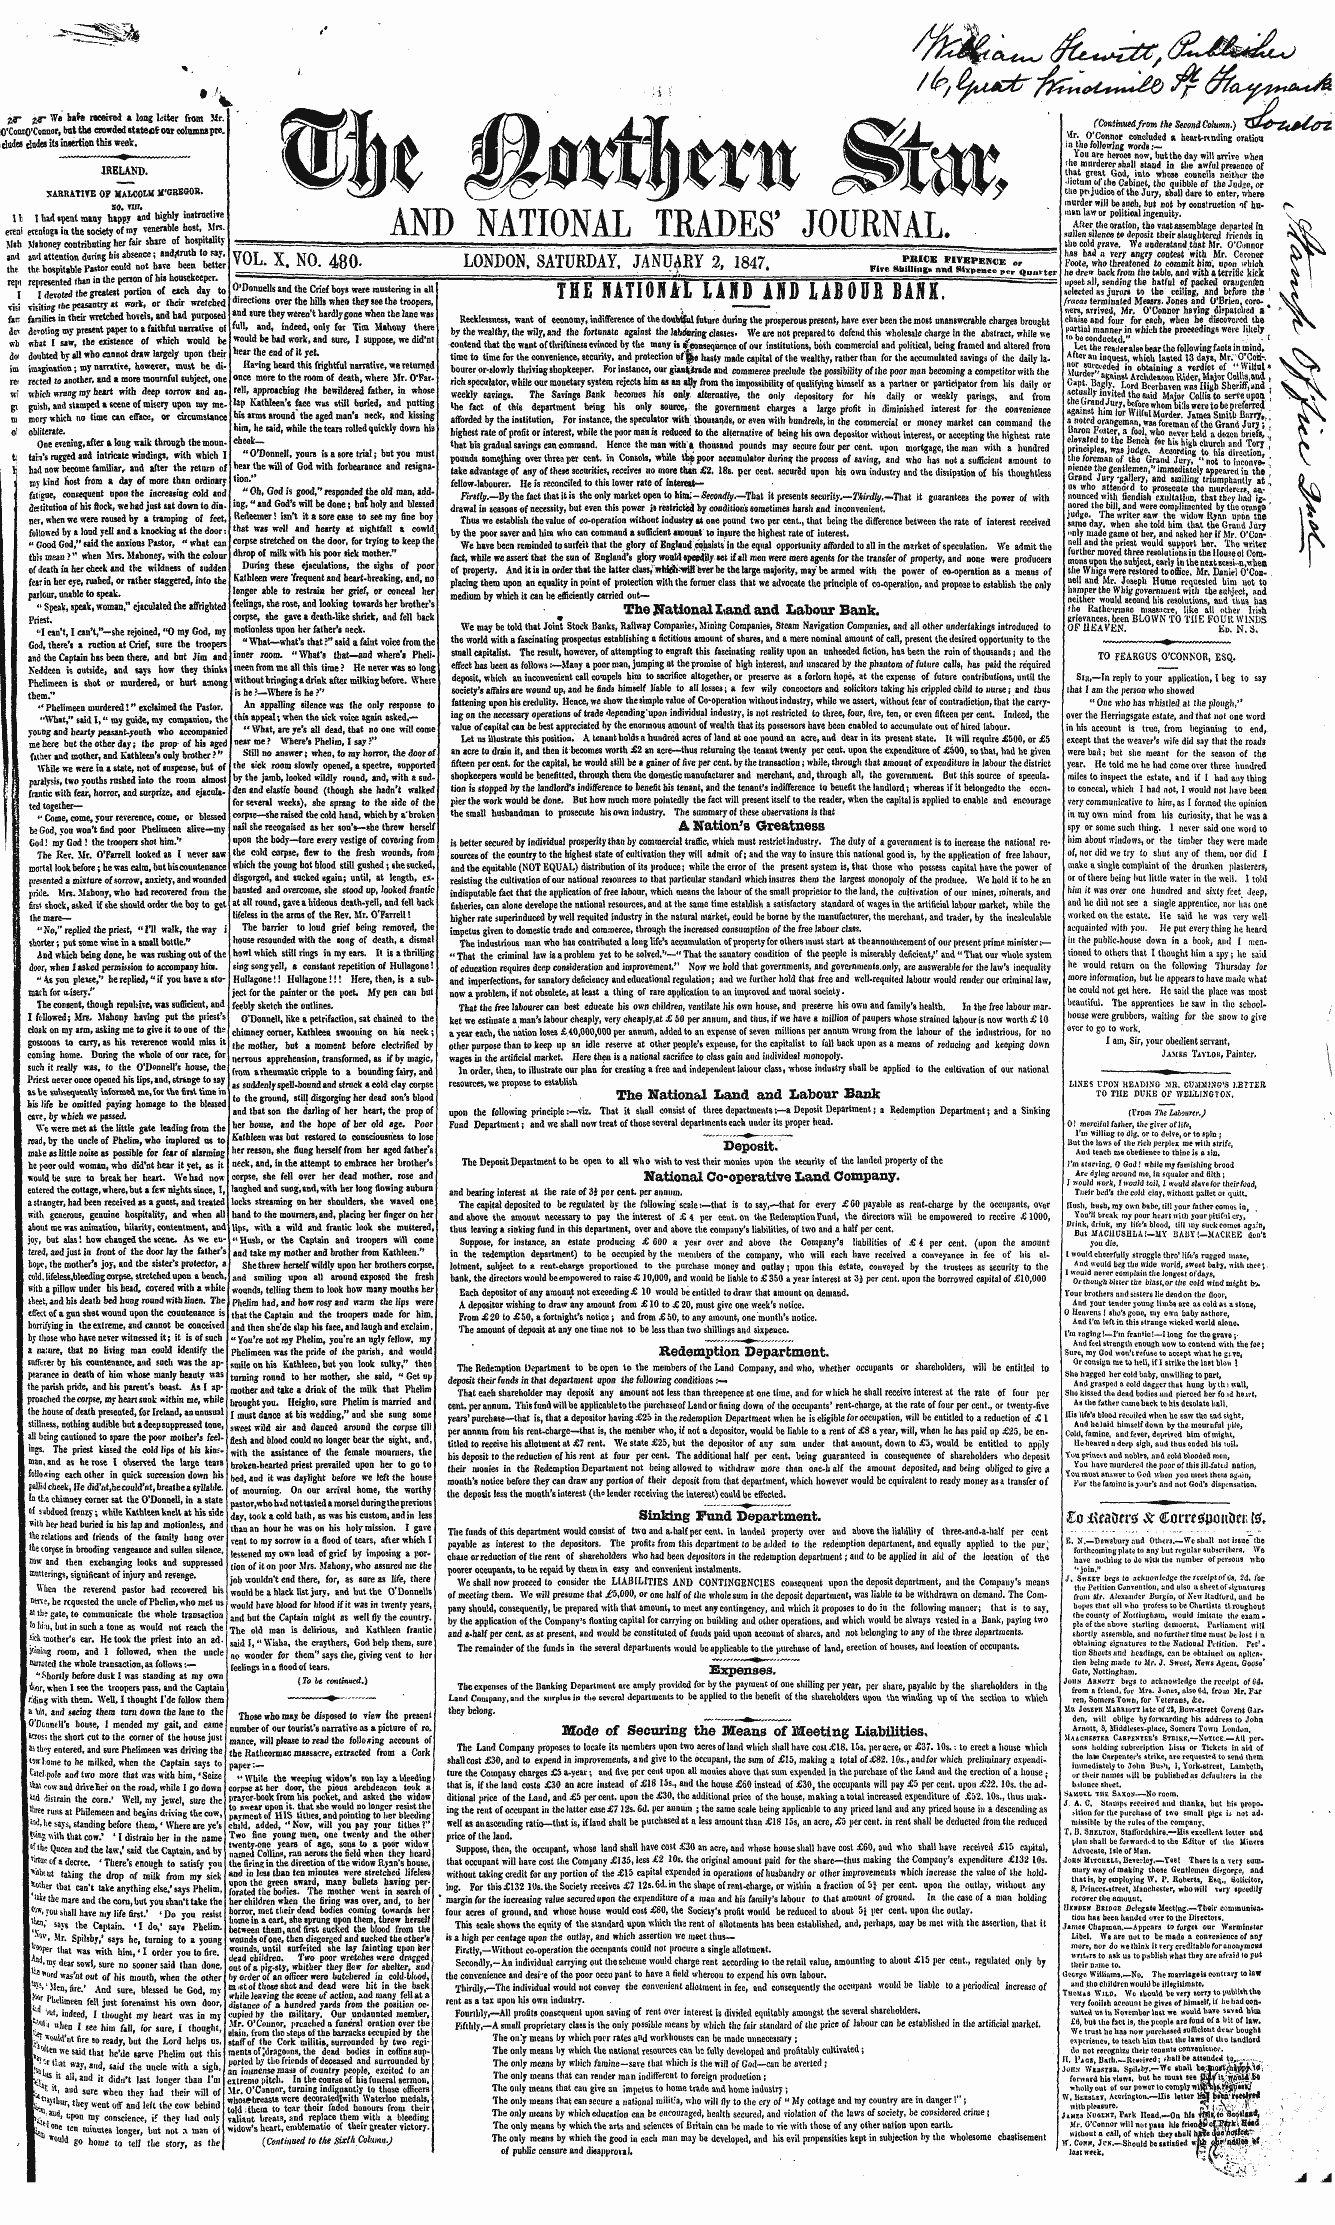 Northern Star (1837-1852): jS F Y, 2nd edition - Ireland. Sabratite Op Malcotm M'-Resor. ...